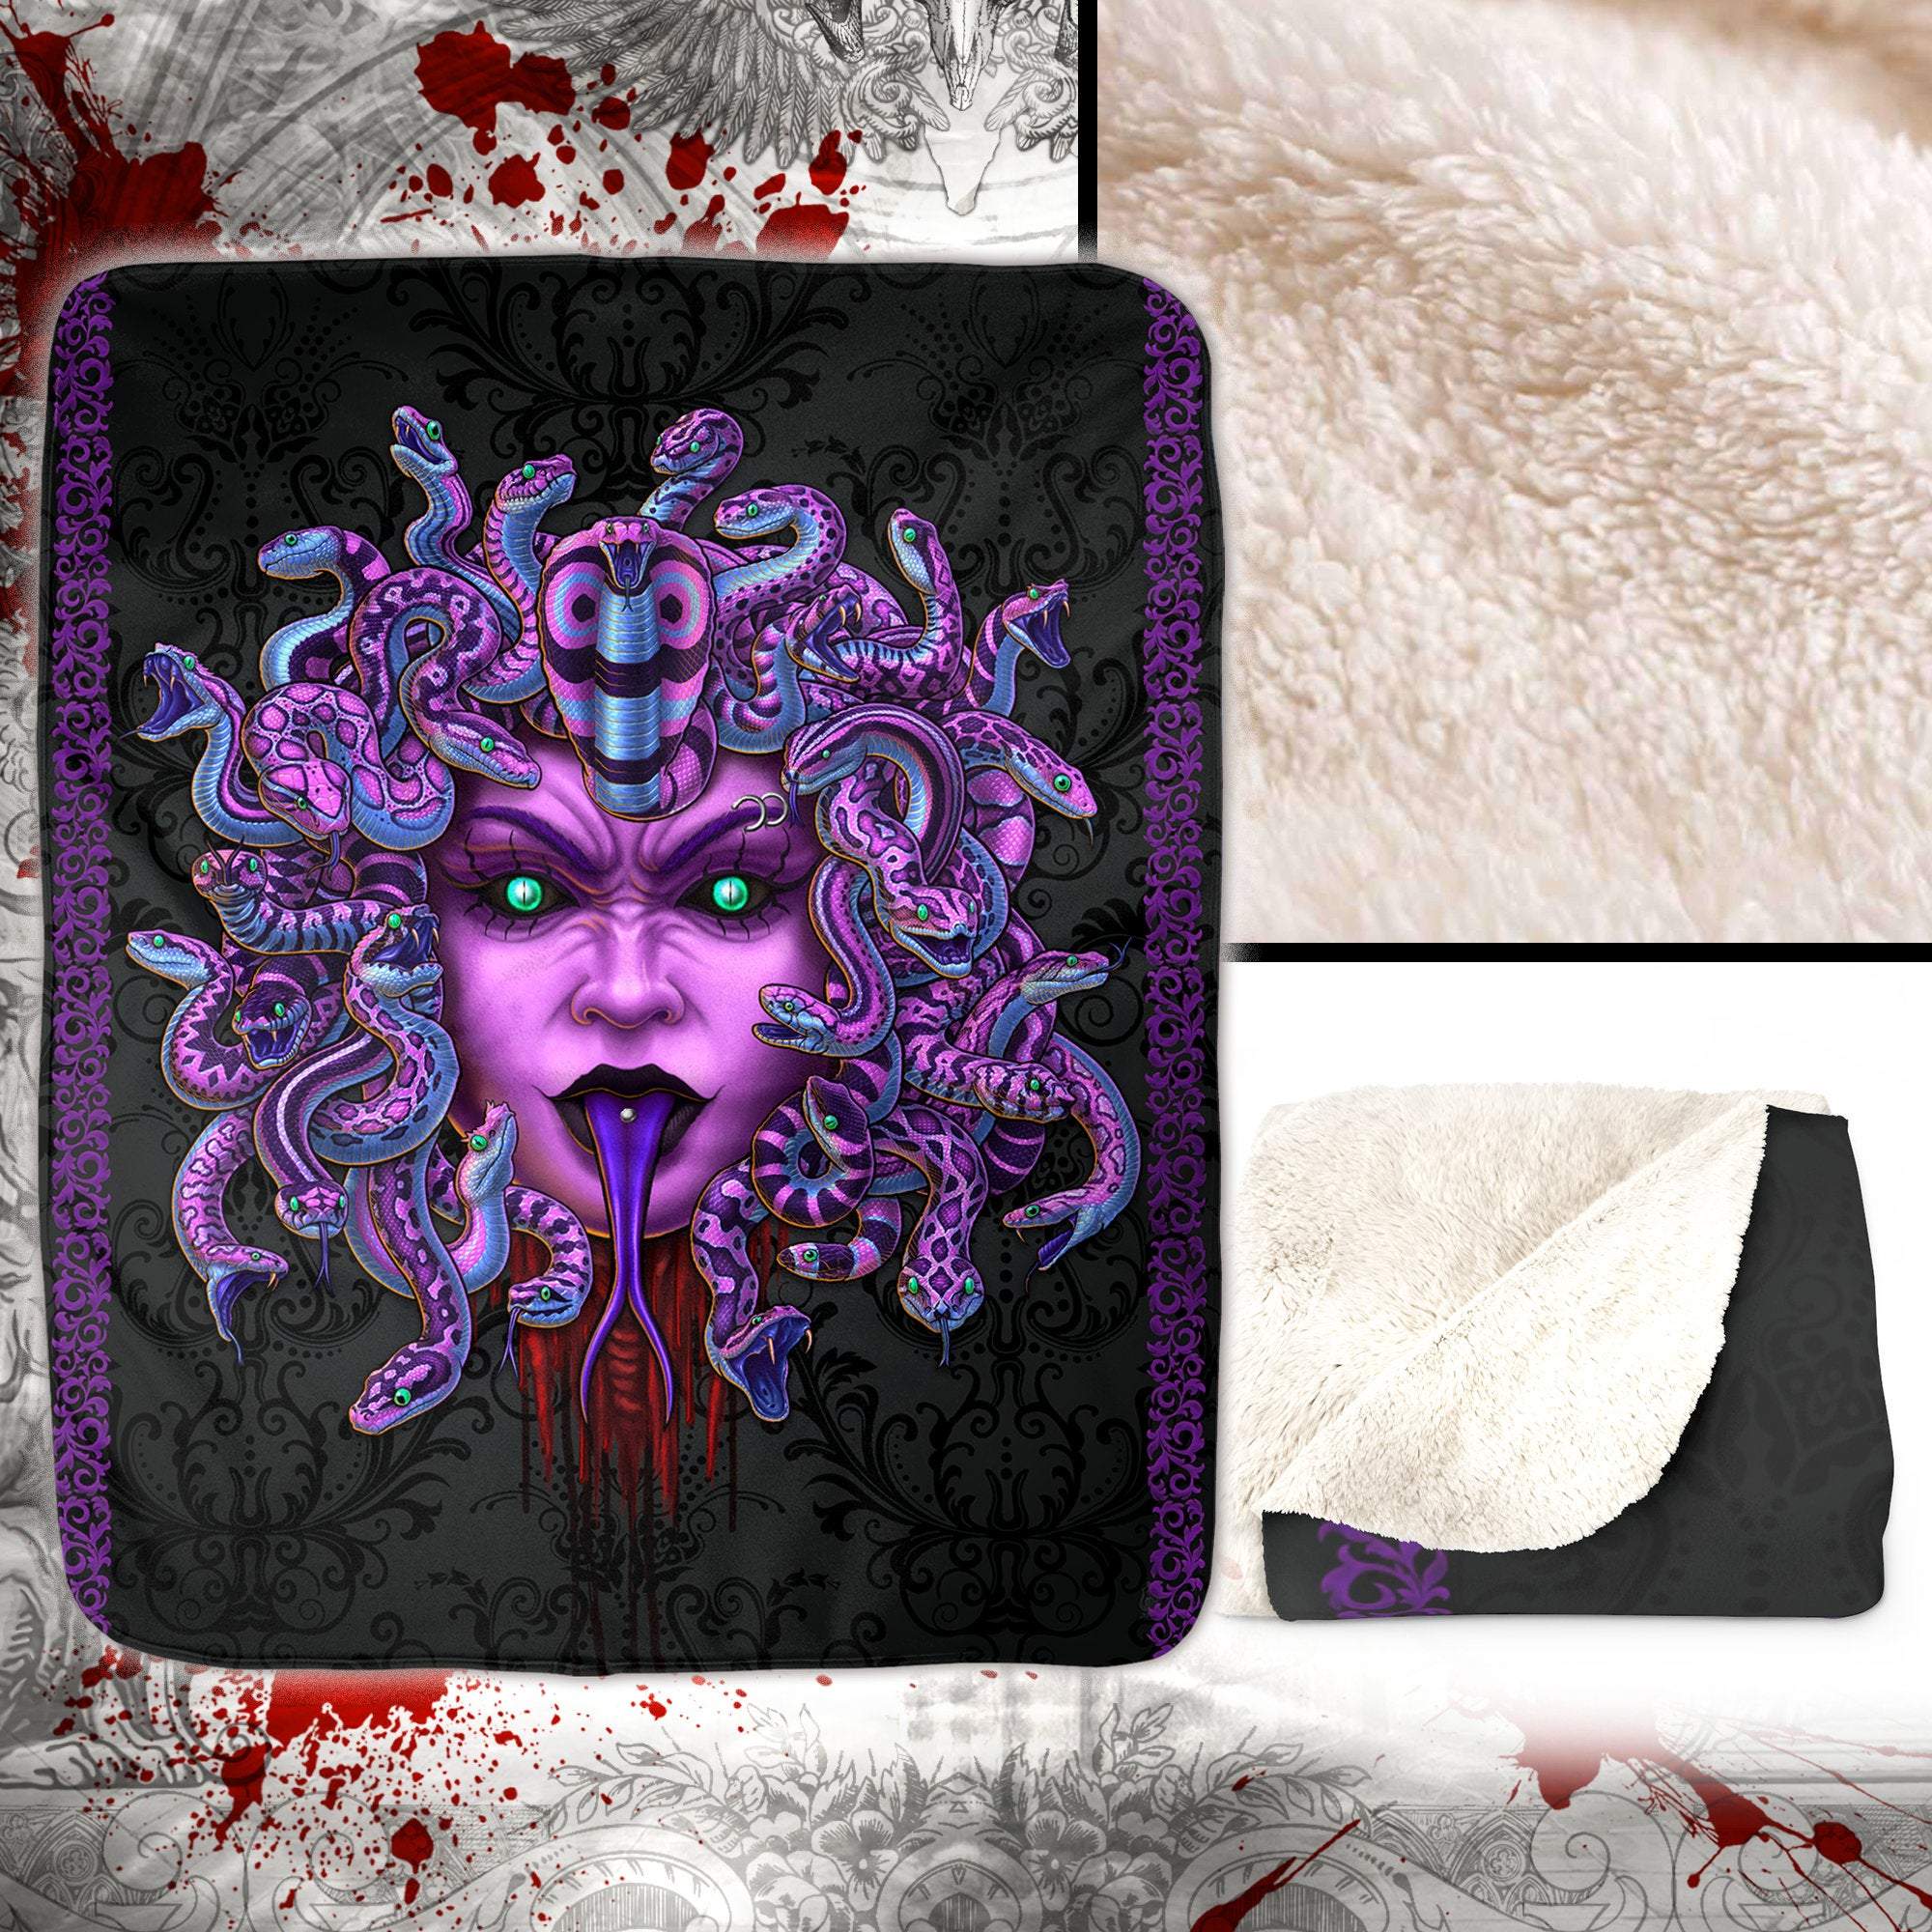 Pastel Goth Throw Fleece Blanket, Gothic Home Decor, Alternative Art Gift - Mocking Medusa, Purple Snakes - Abysm Internal